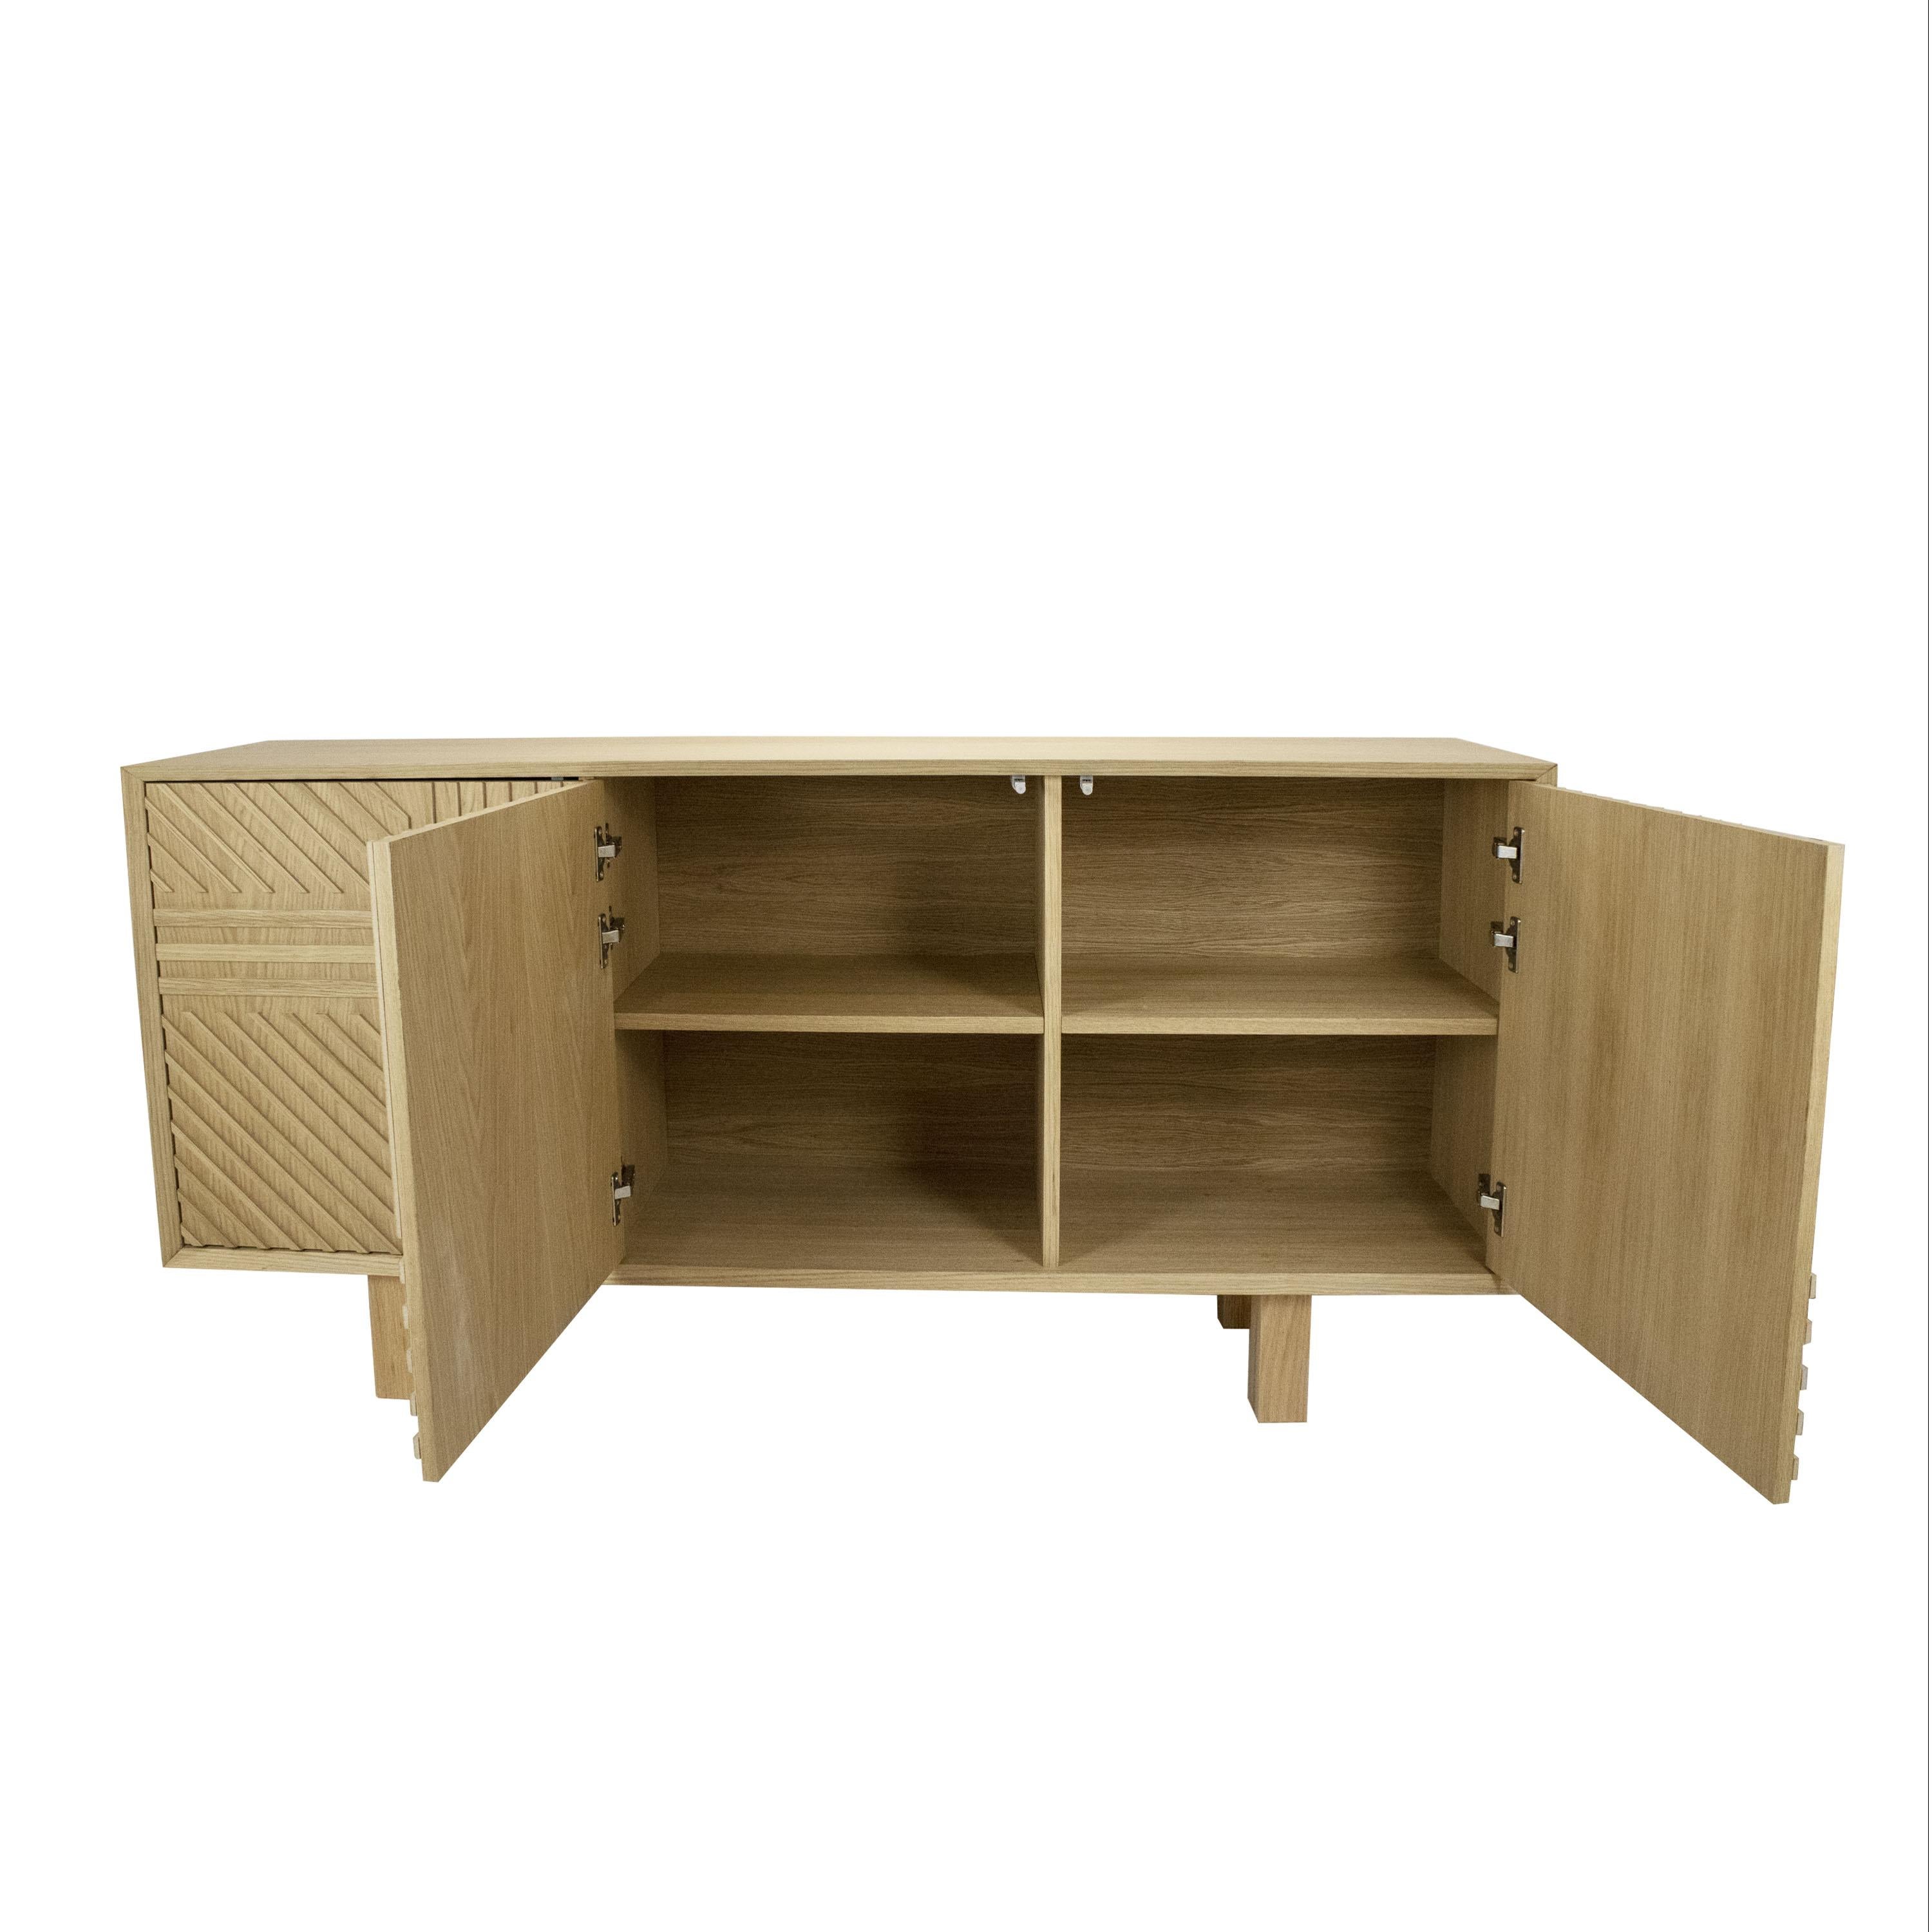 Hand-Crafted Solid Oak Three Doors Sideboard Desigend by IKB191 Studio, Spain, 2022 For Sale